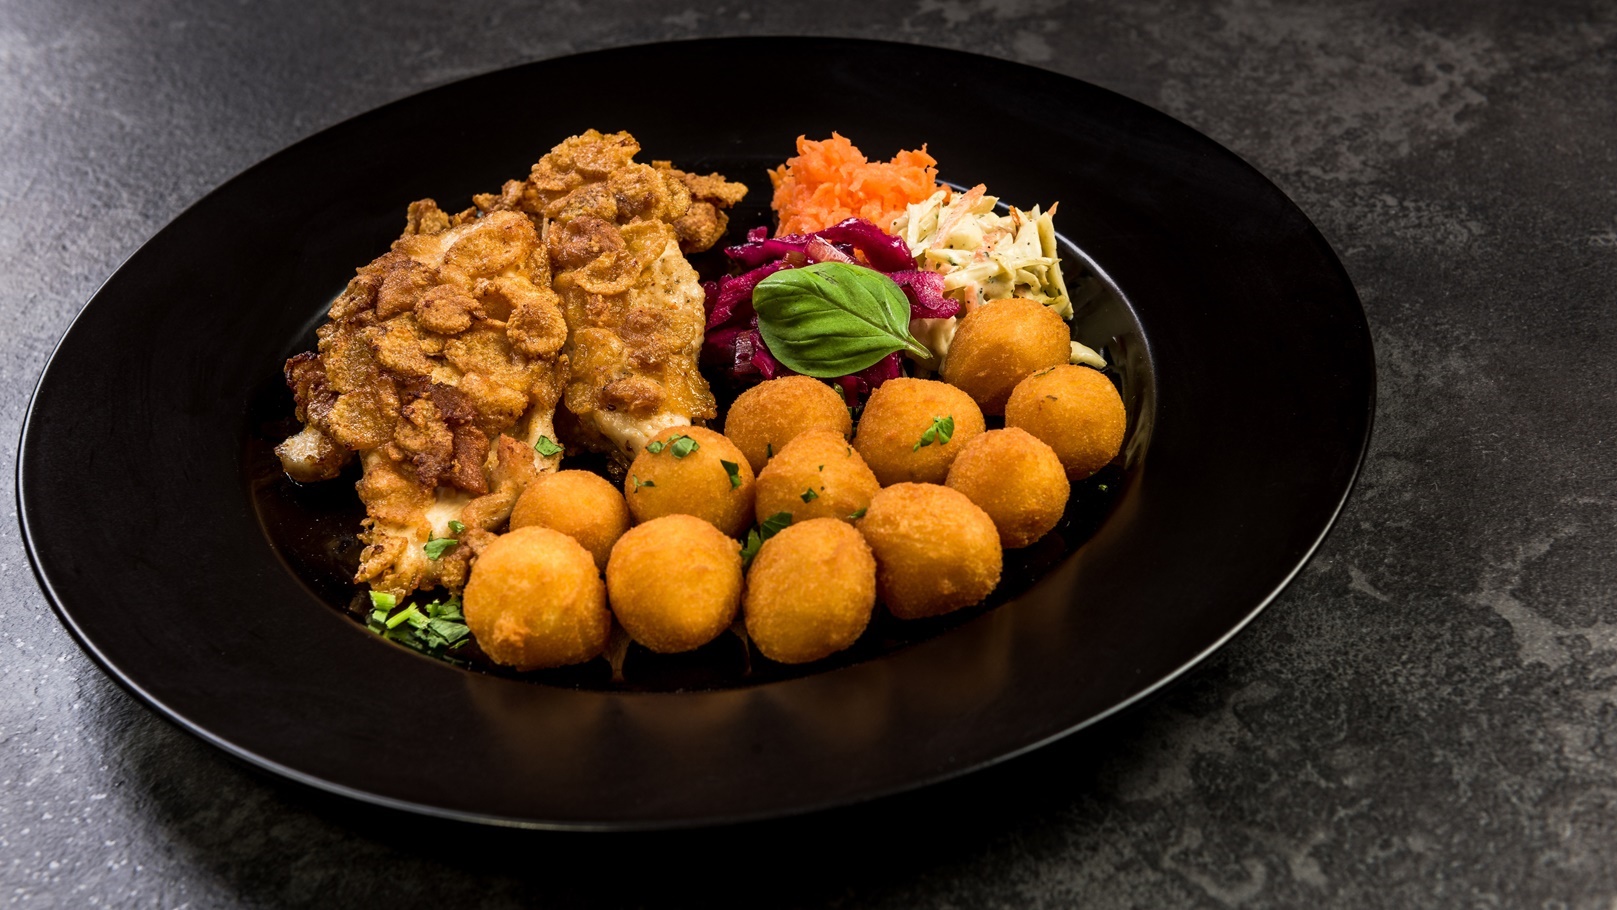 fried-chicken-with-potato-balls-and-salad-restaur-2021-08-26-16-37-20-utc